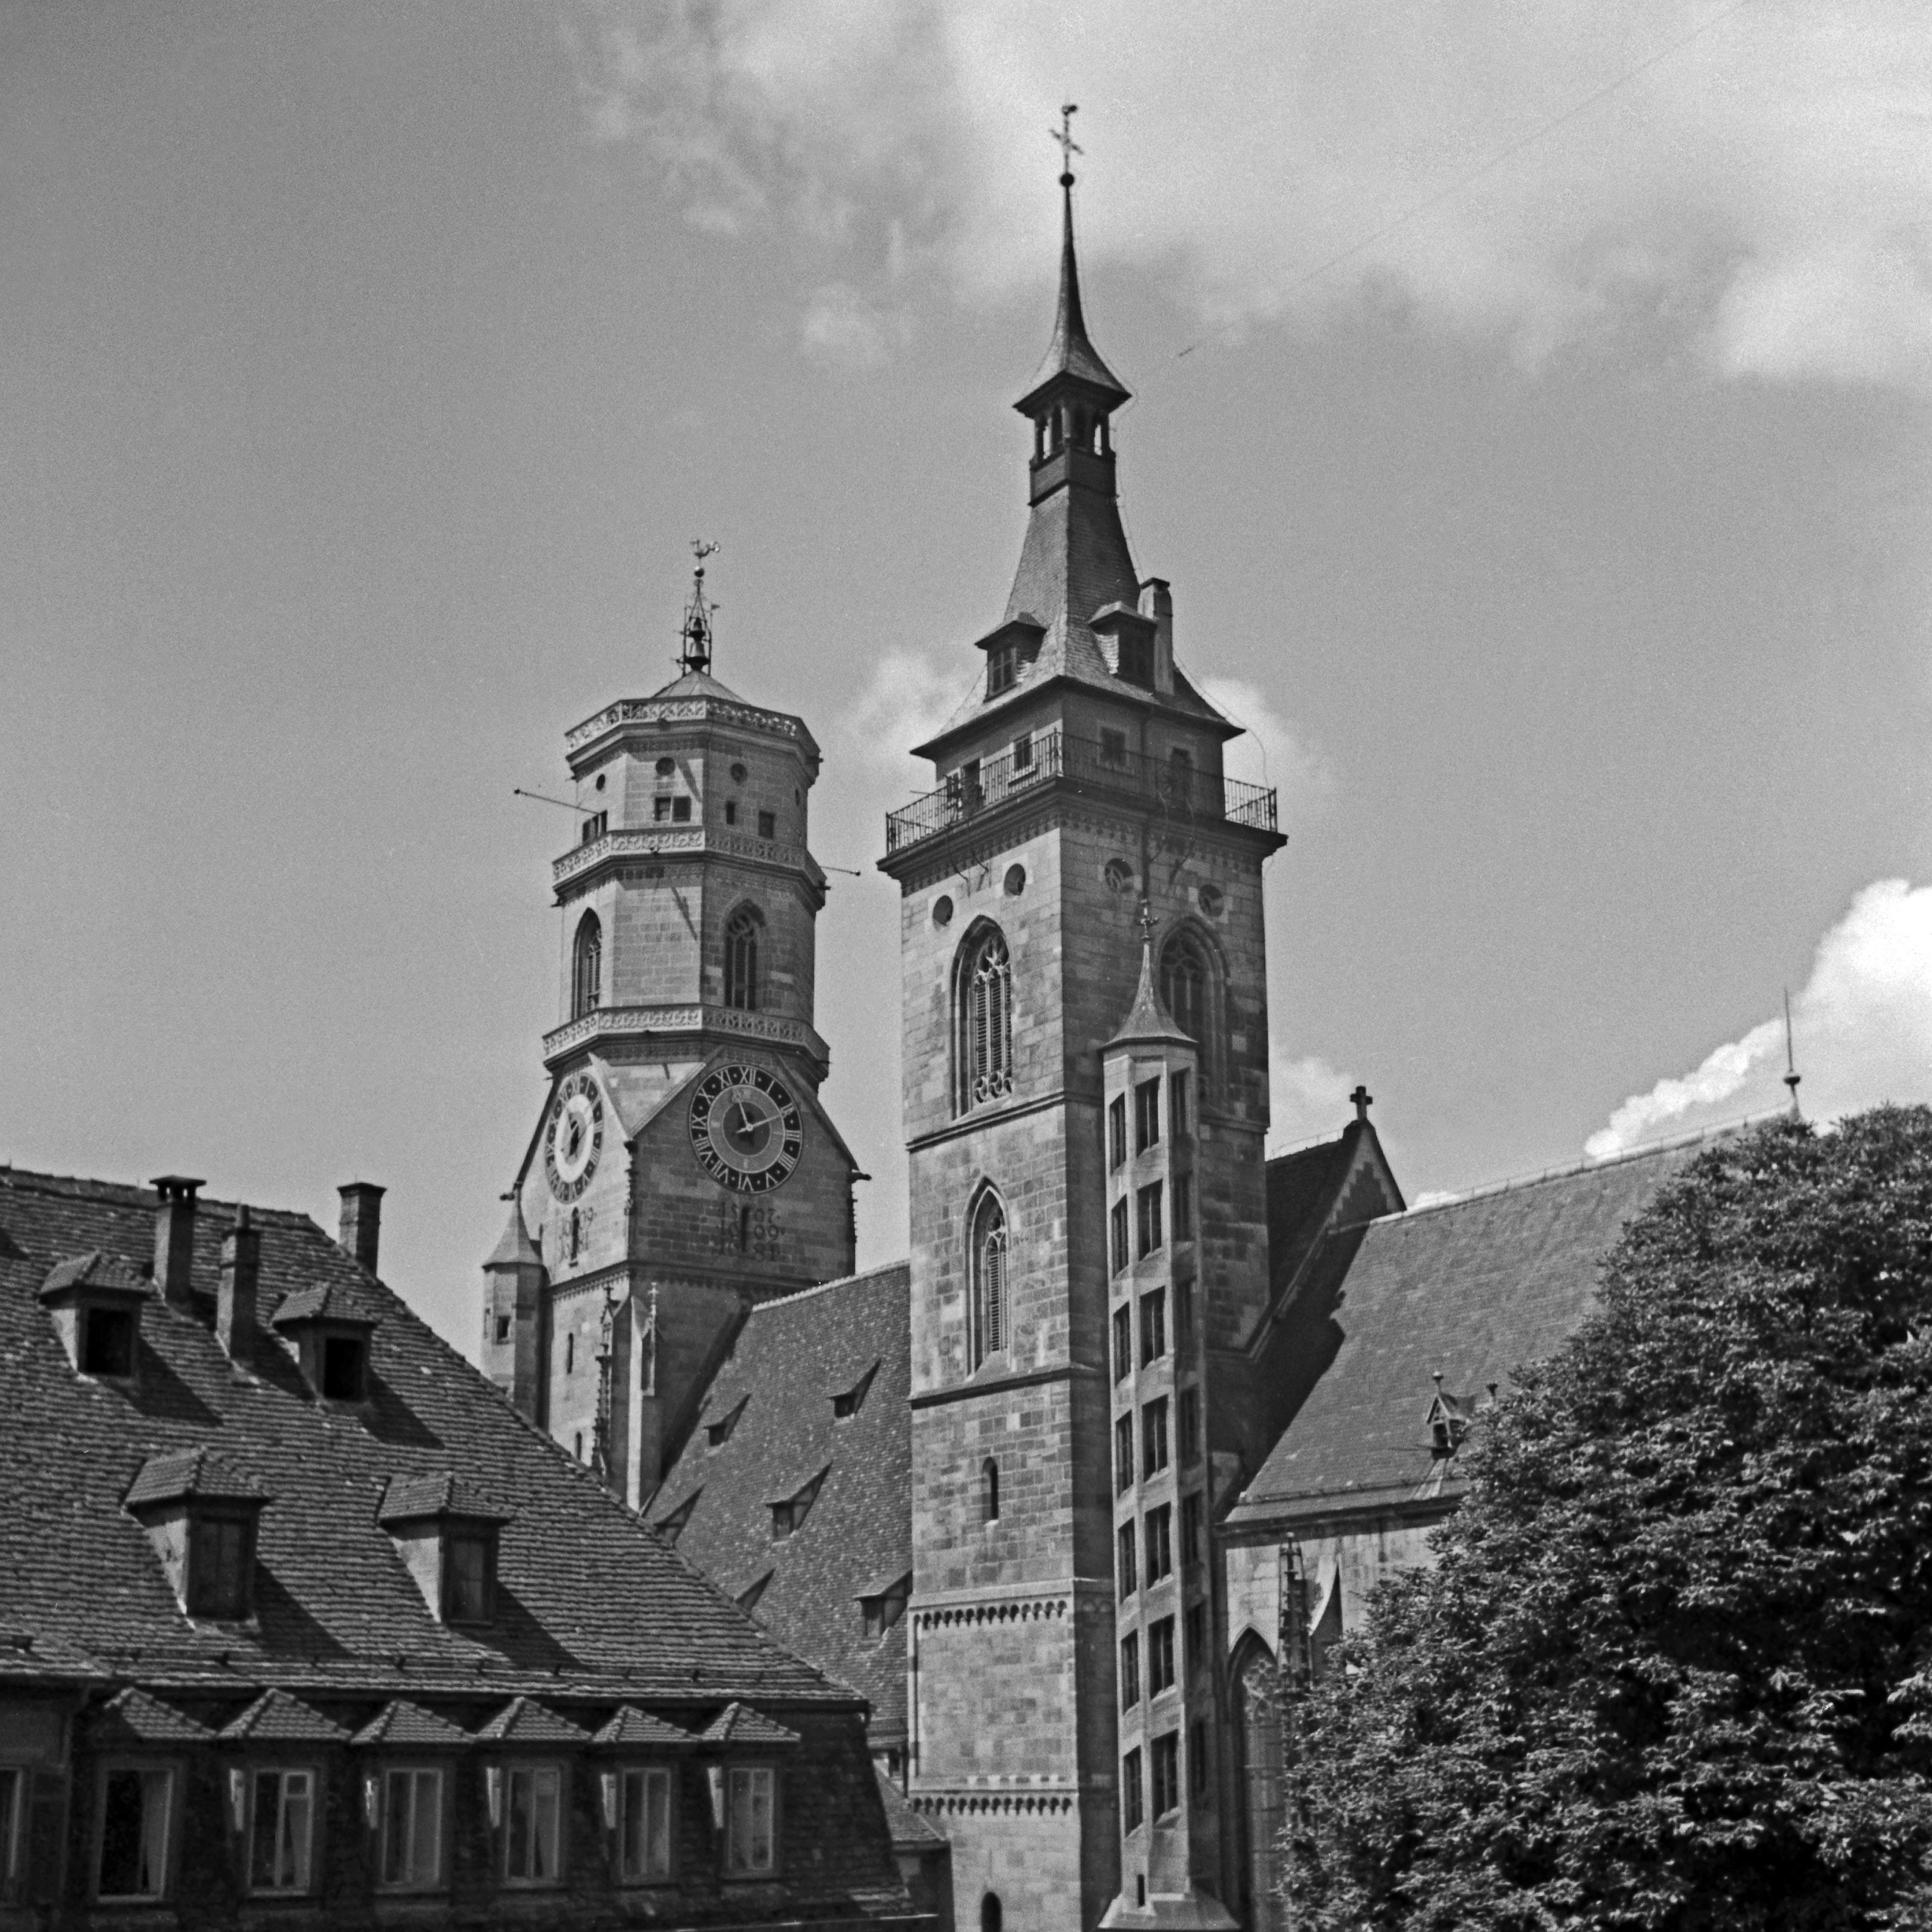 Karl Heinrich Lämmel Black and White Photograph - Belfries of collegiate church at Stuttgart, Germany 1935, Printed Later